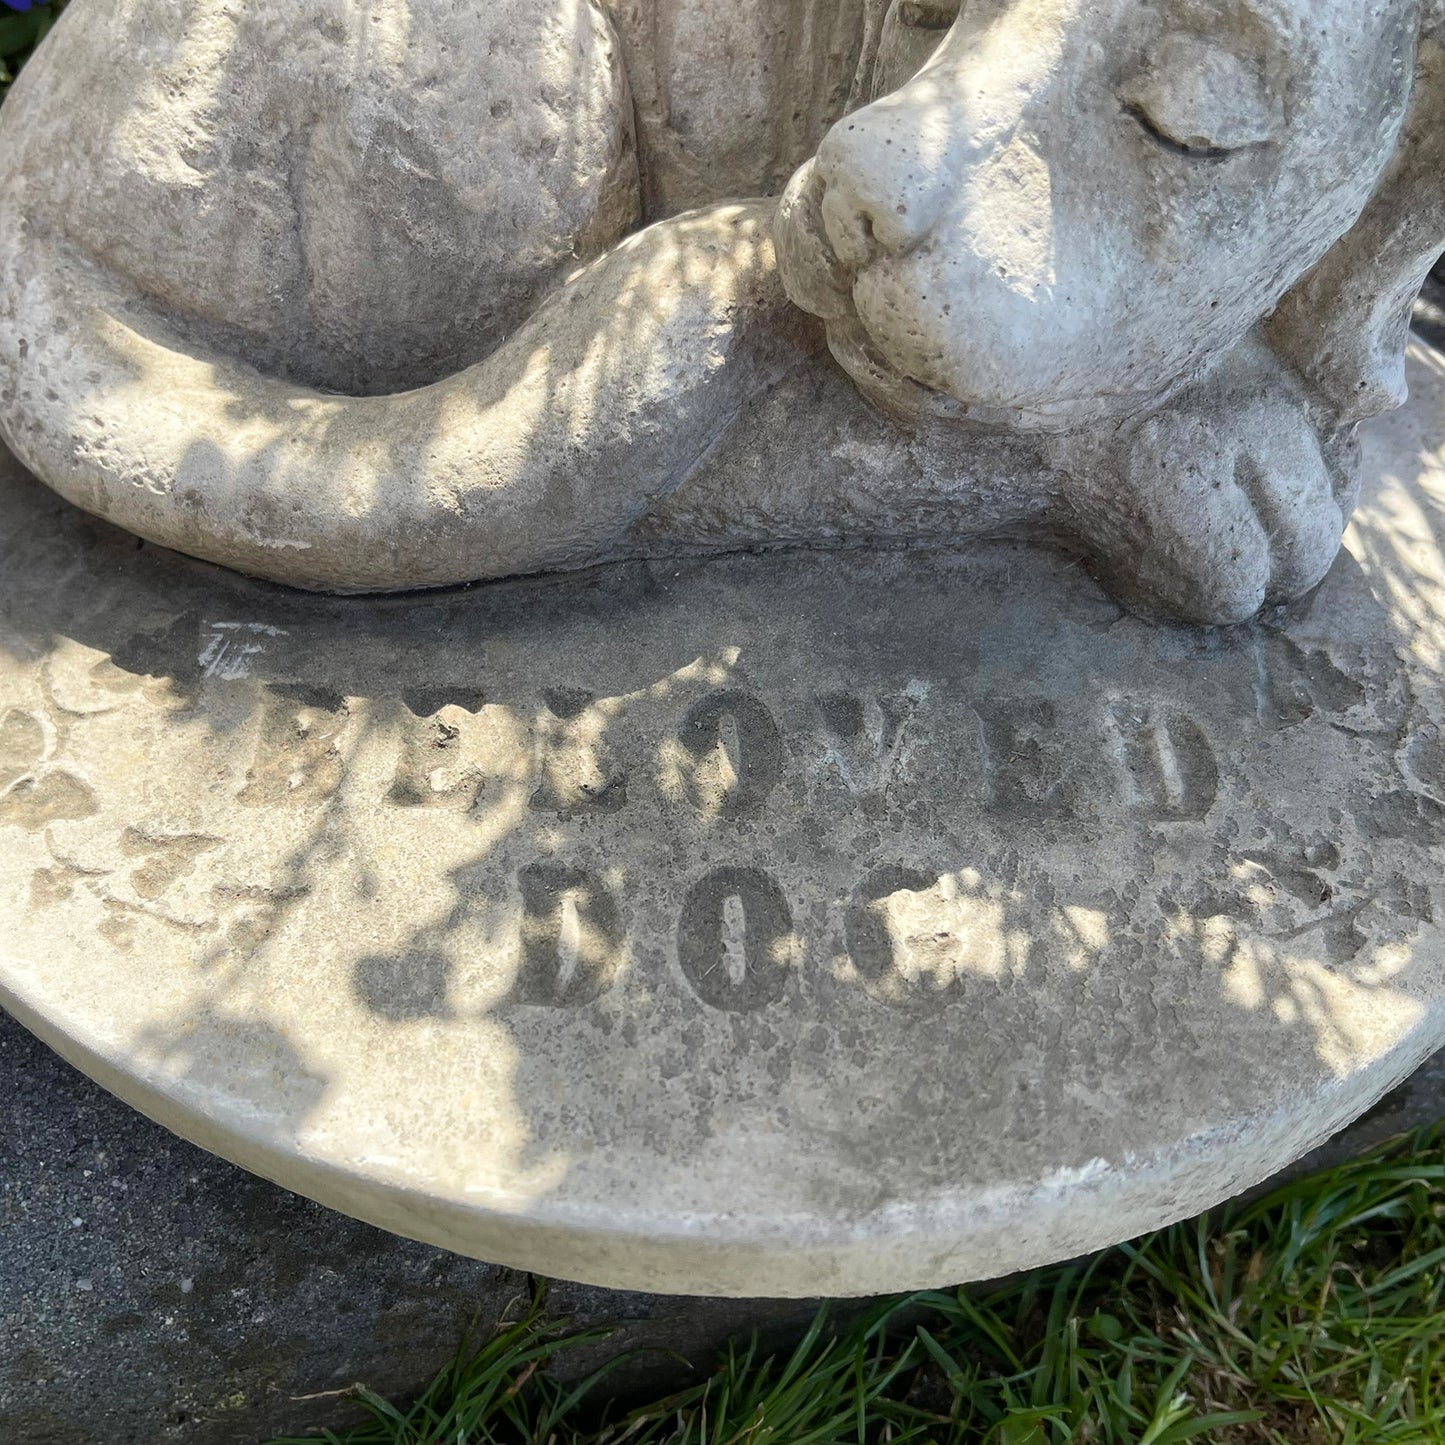 Stone Beloved Dog Memorial Ornament